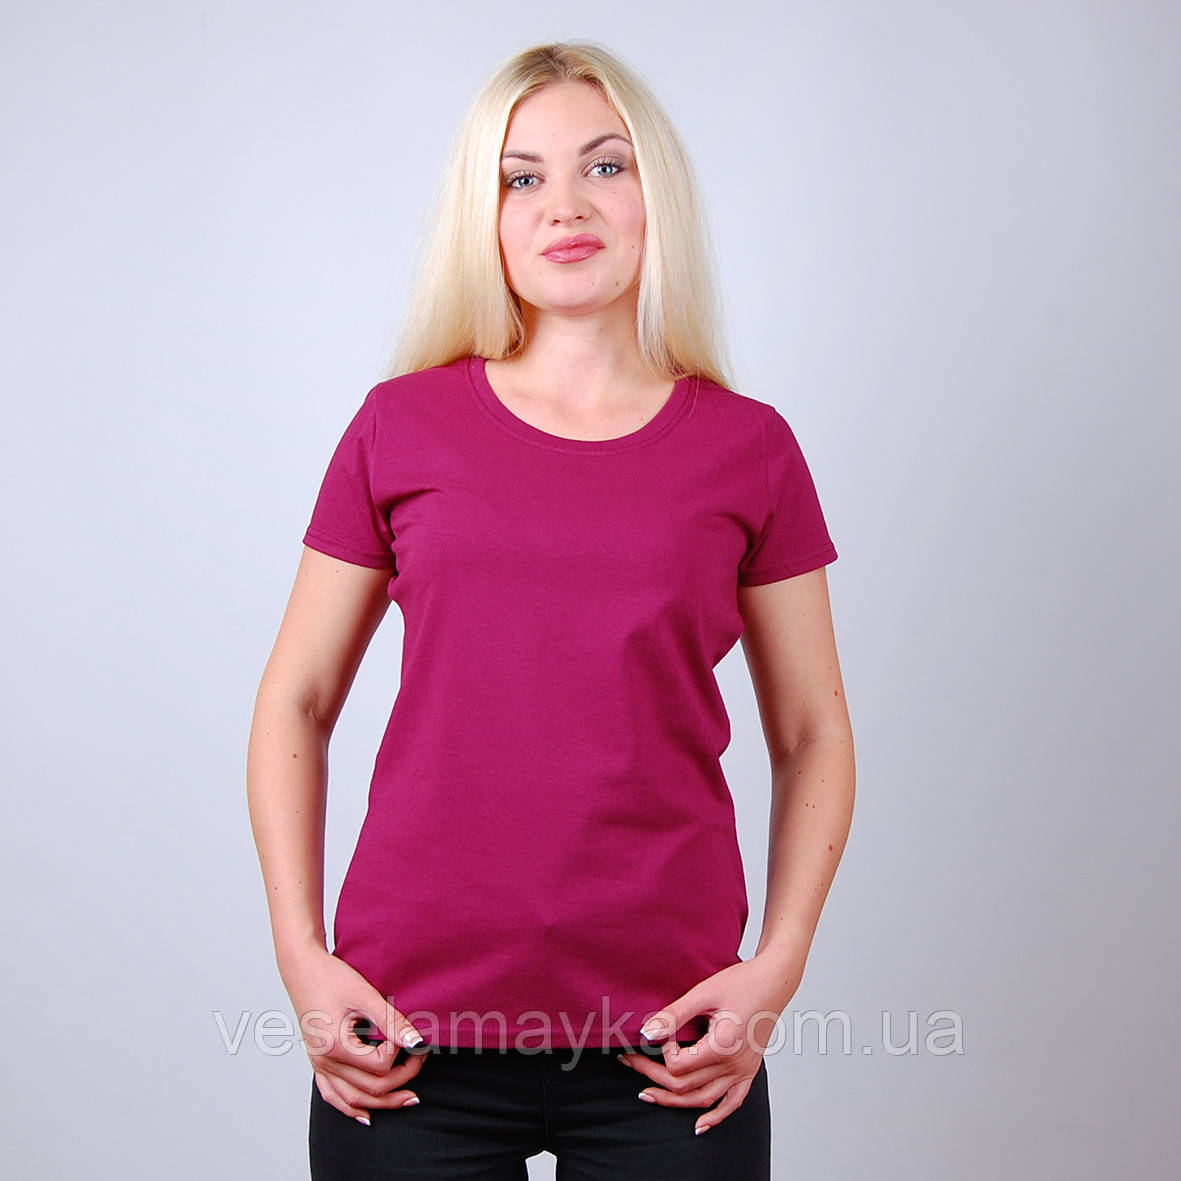 Бордова жіноча футболка (Комфорт)